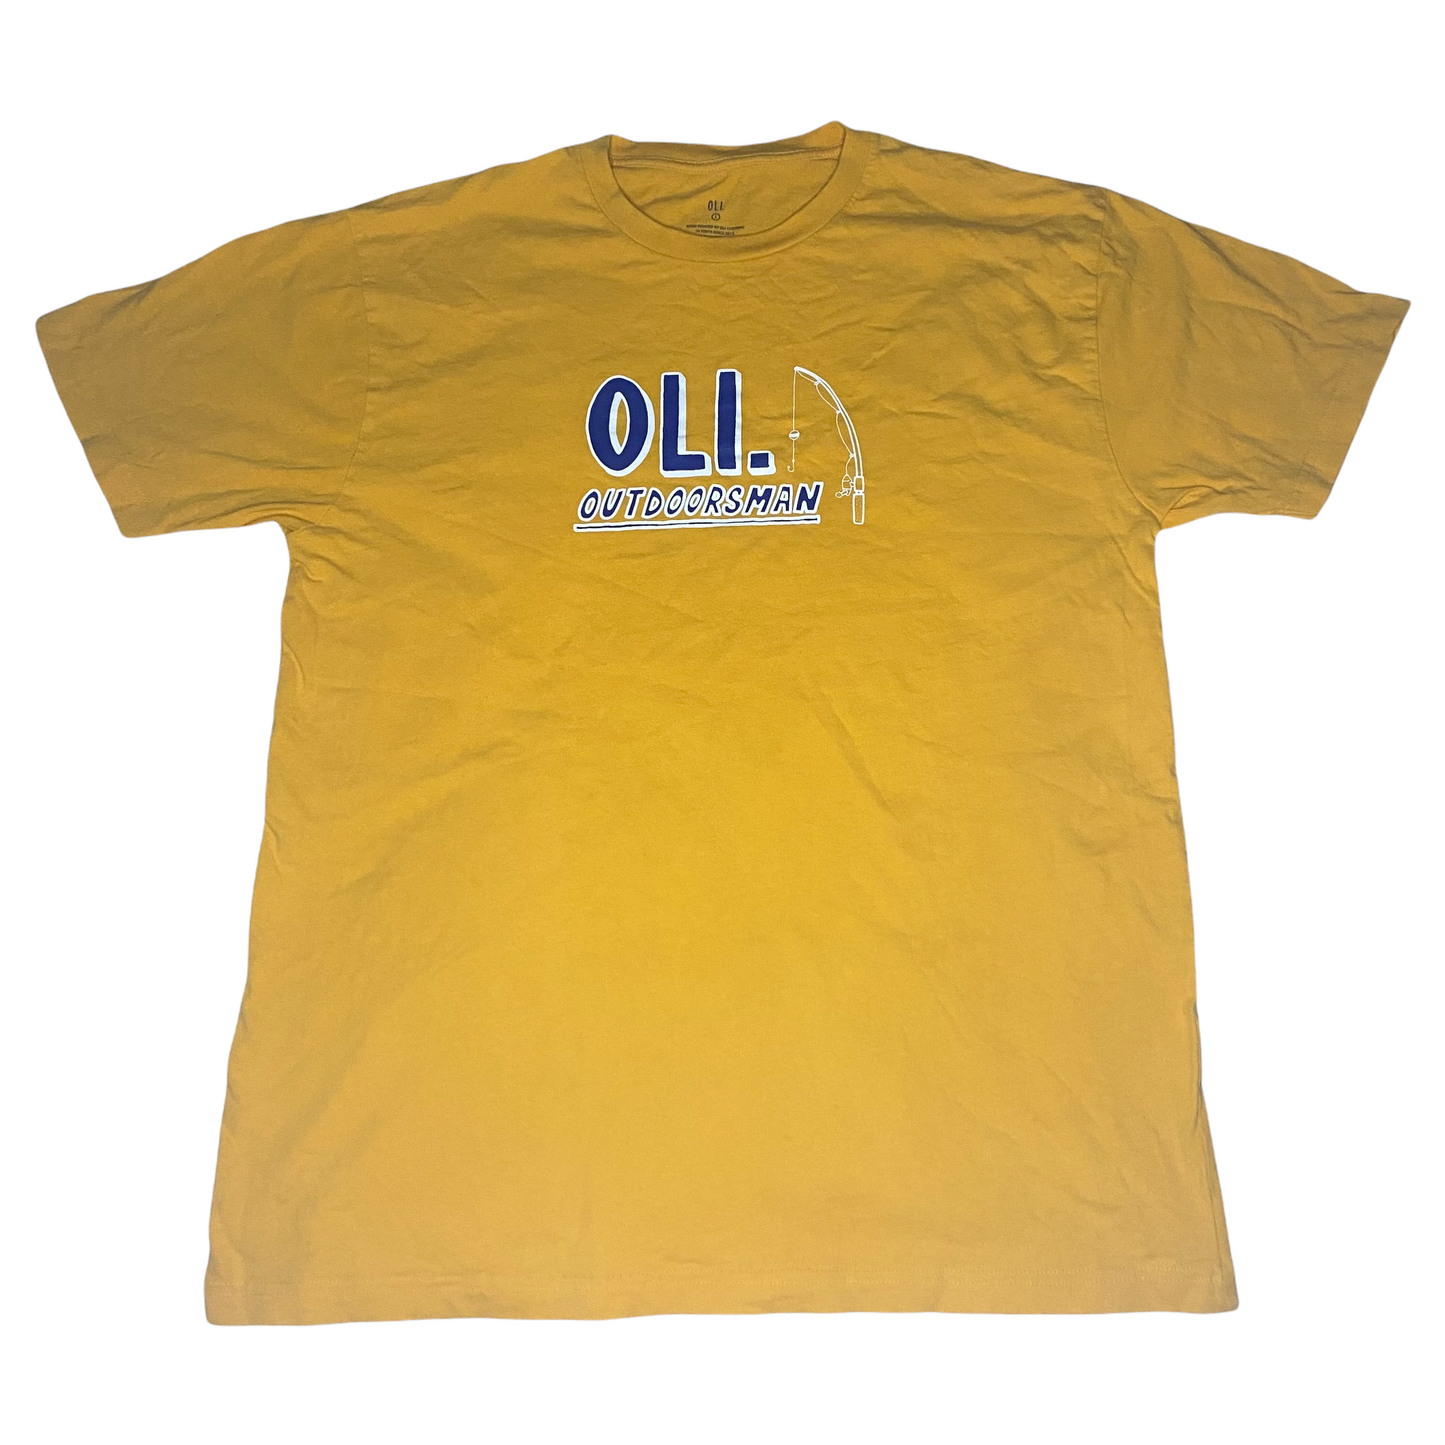 Oli 'Outdoorsman' T-Shirt